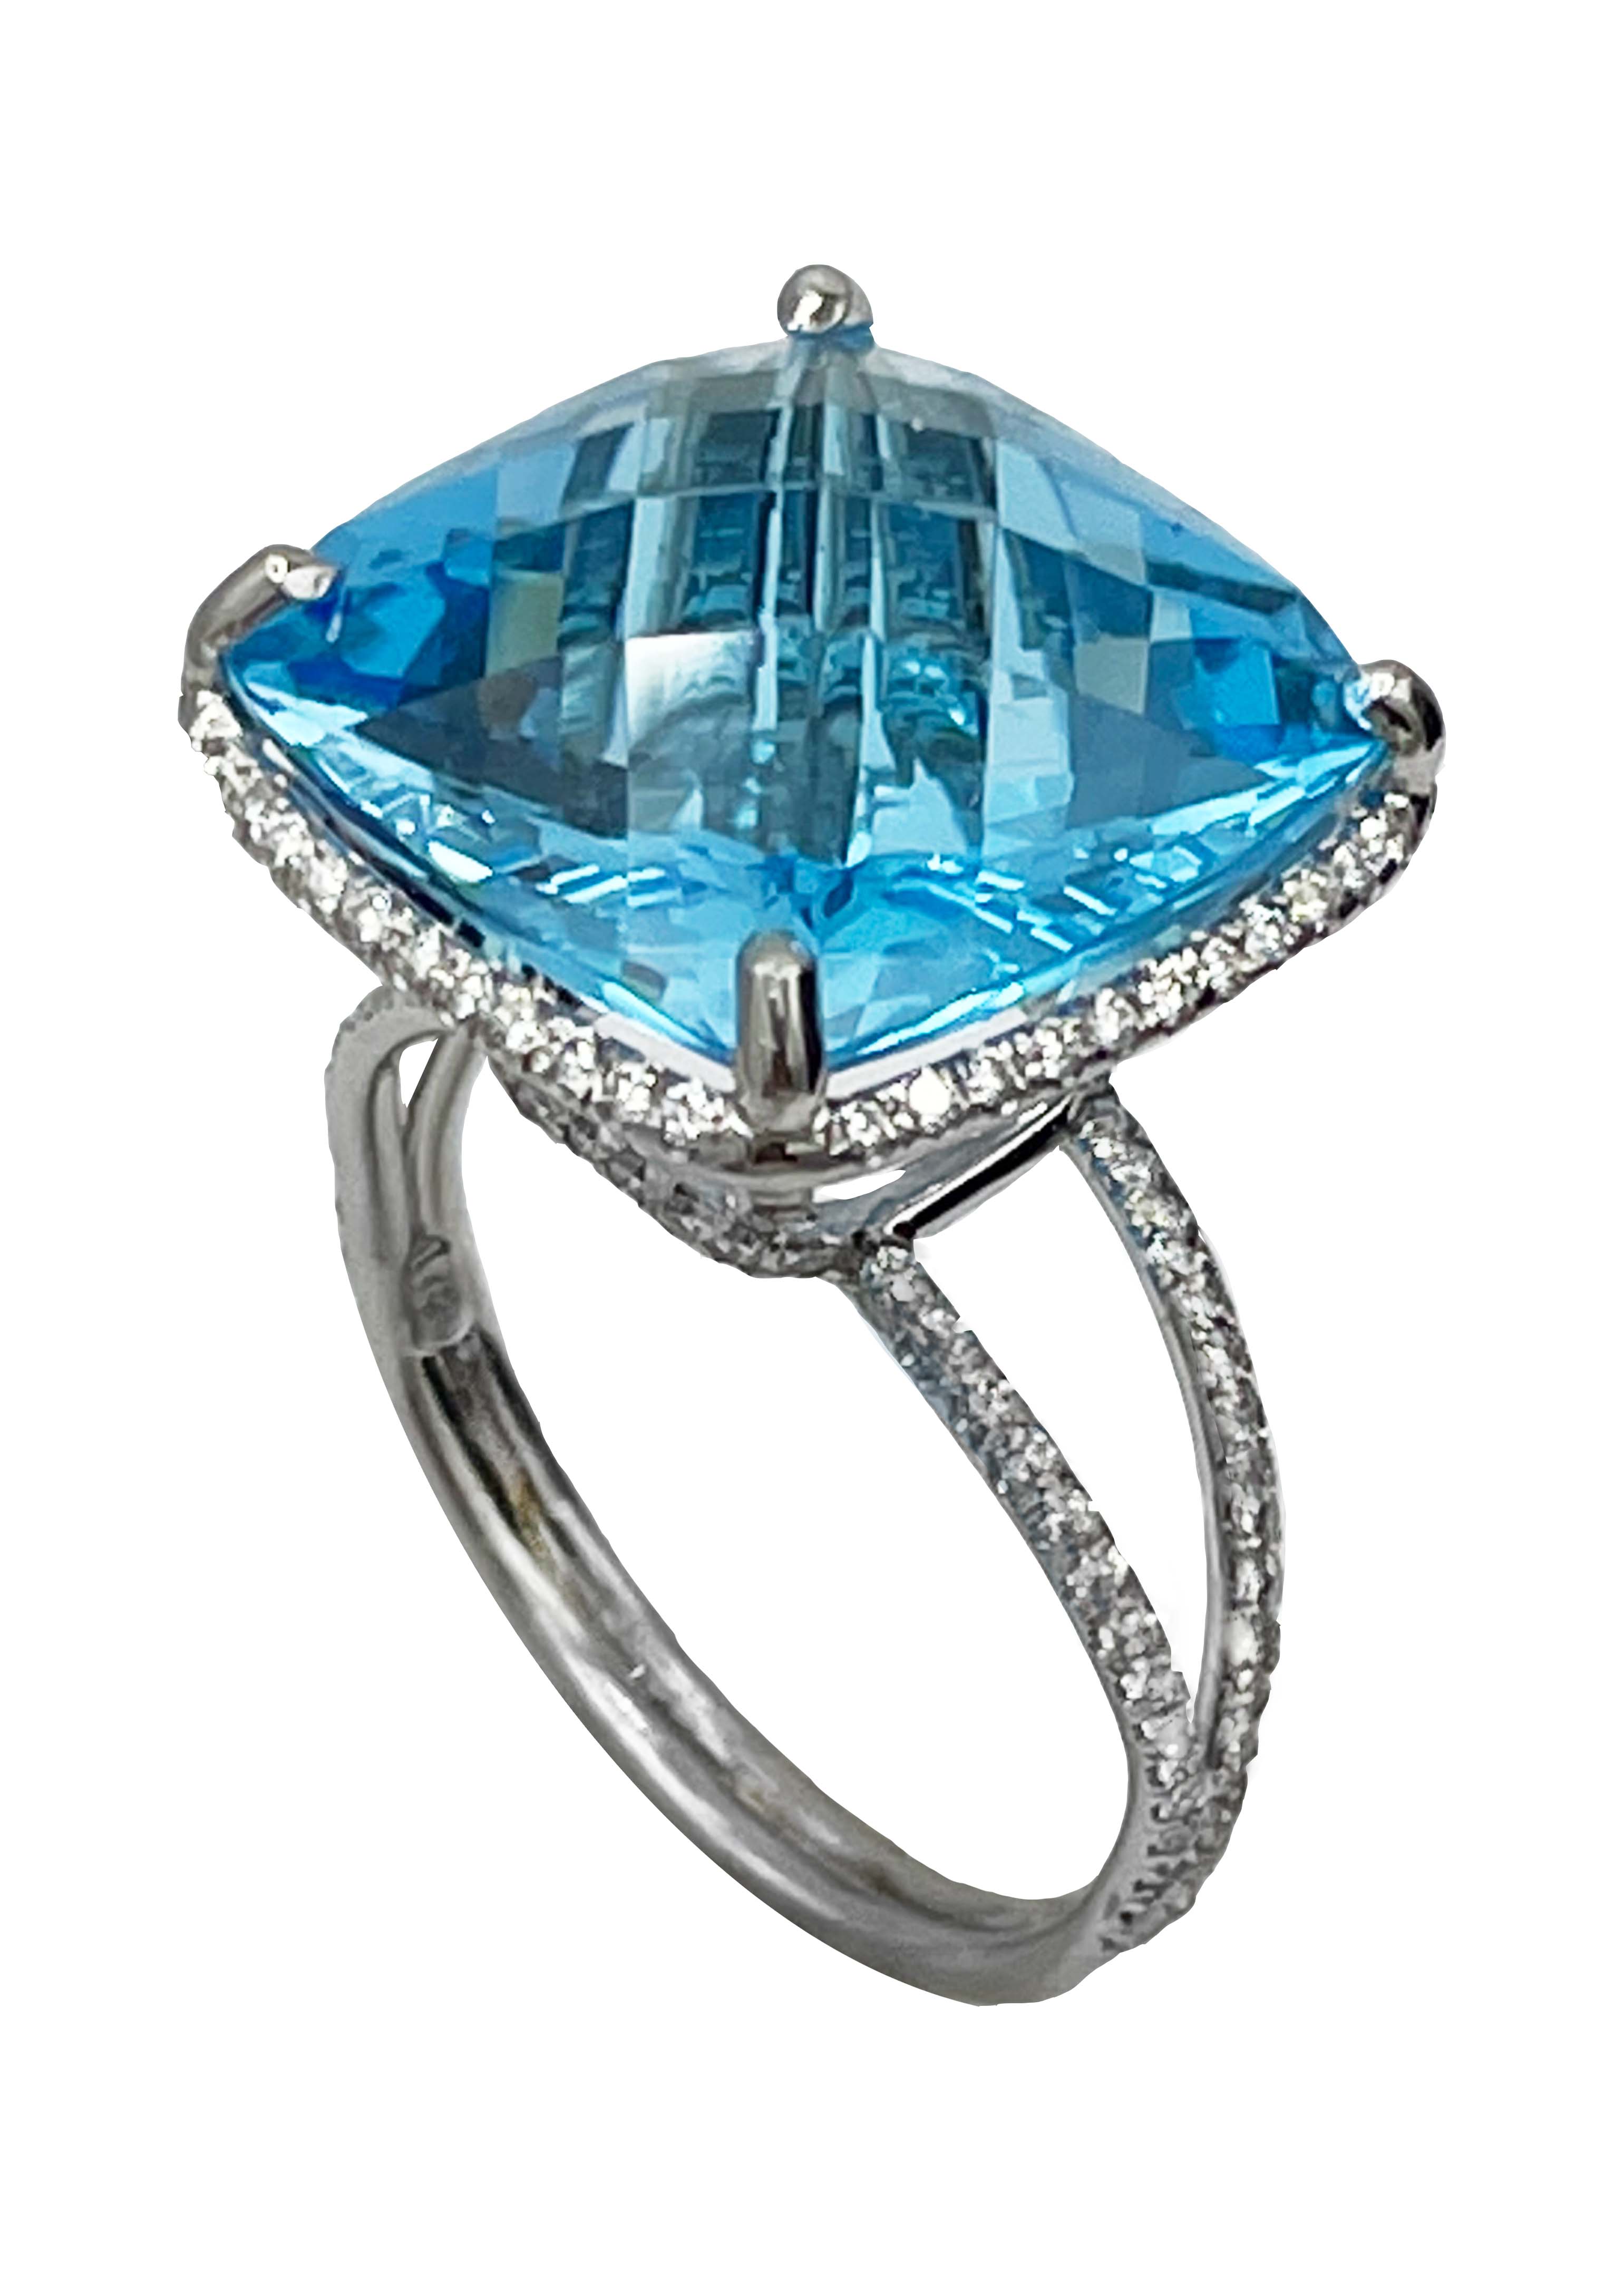 18k White Gold Blue Topaz and Diamonds Ring Image